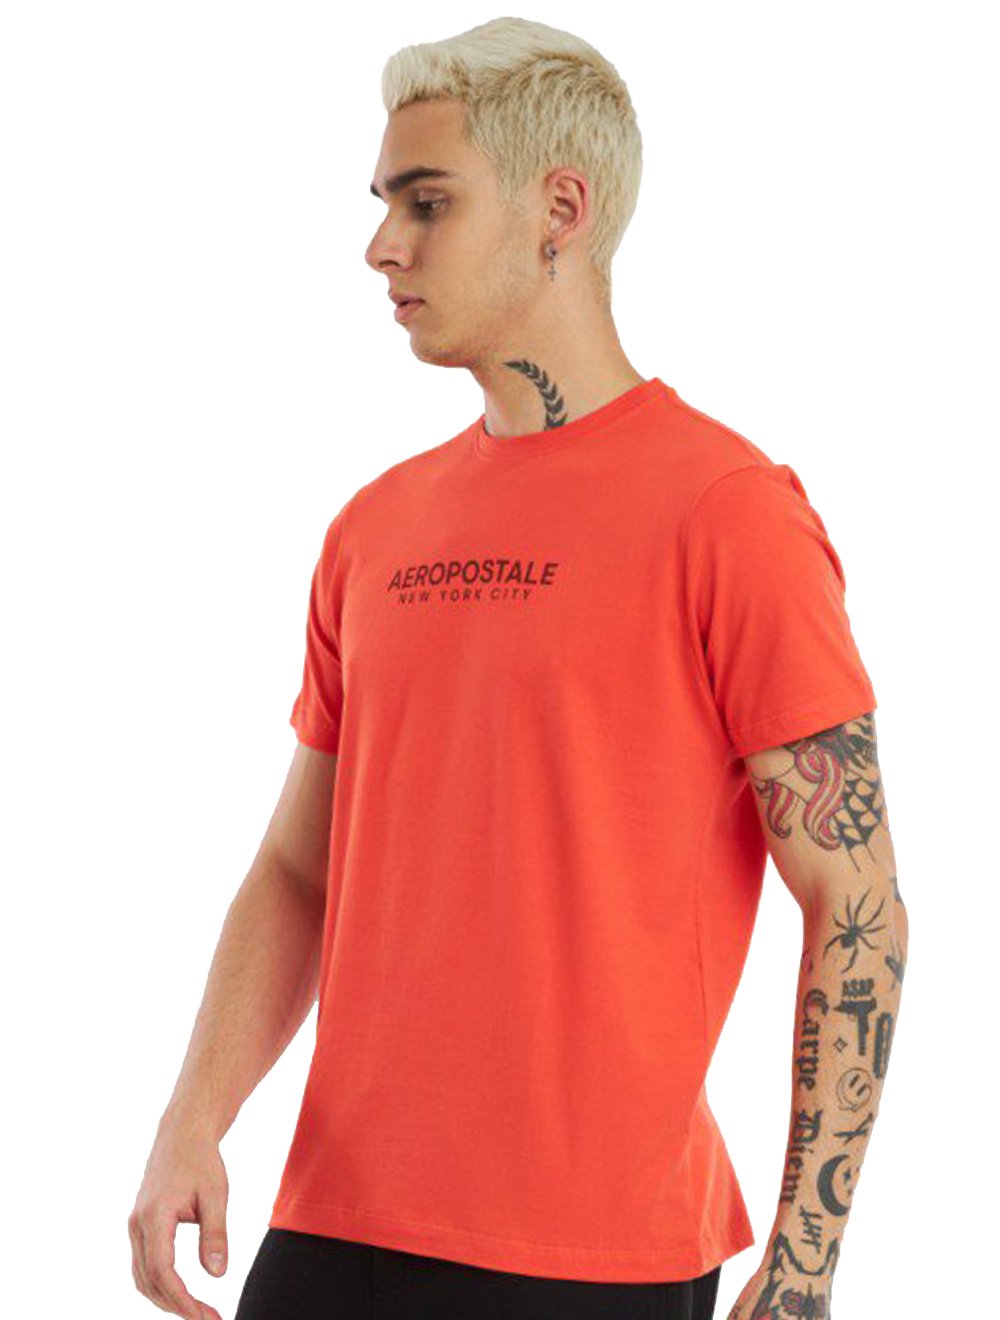 Camiseta Aeropostale Masculina Colors New York City Laranja